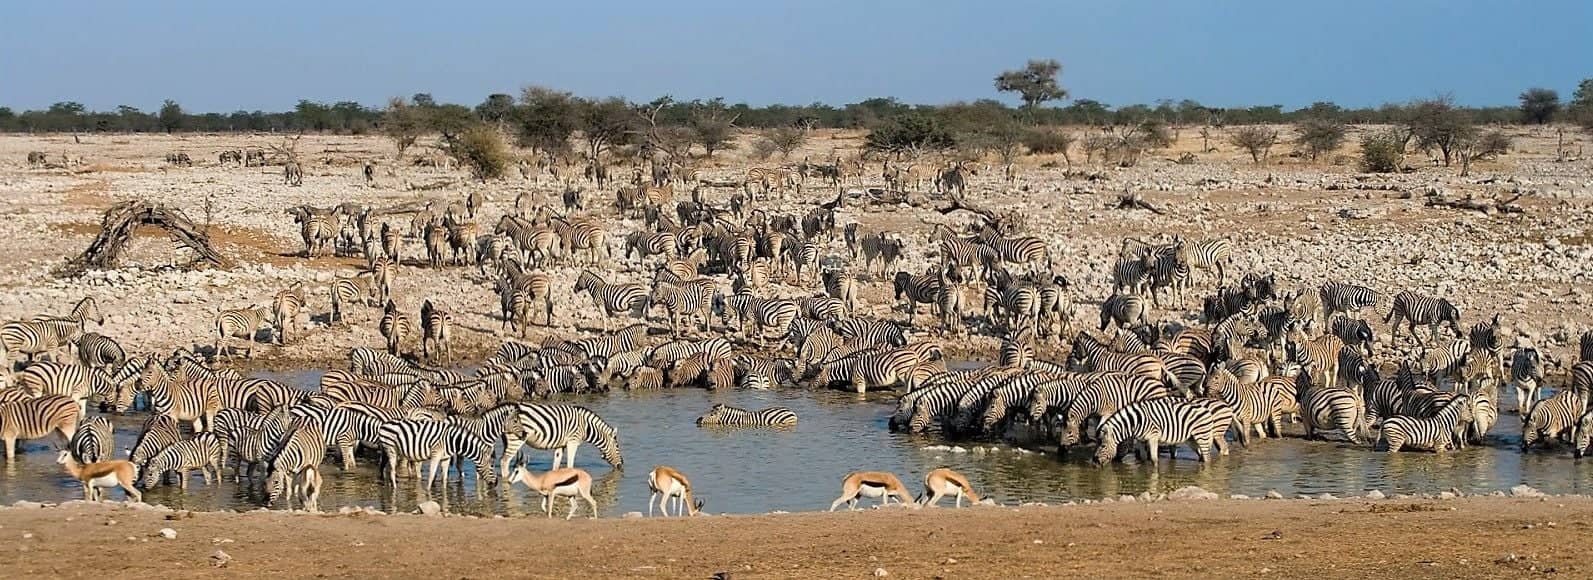 Safari nell'Etosha